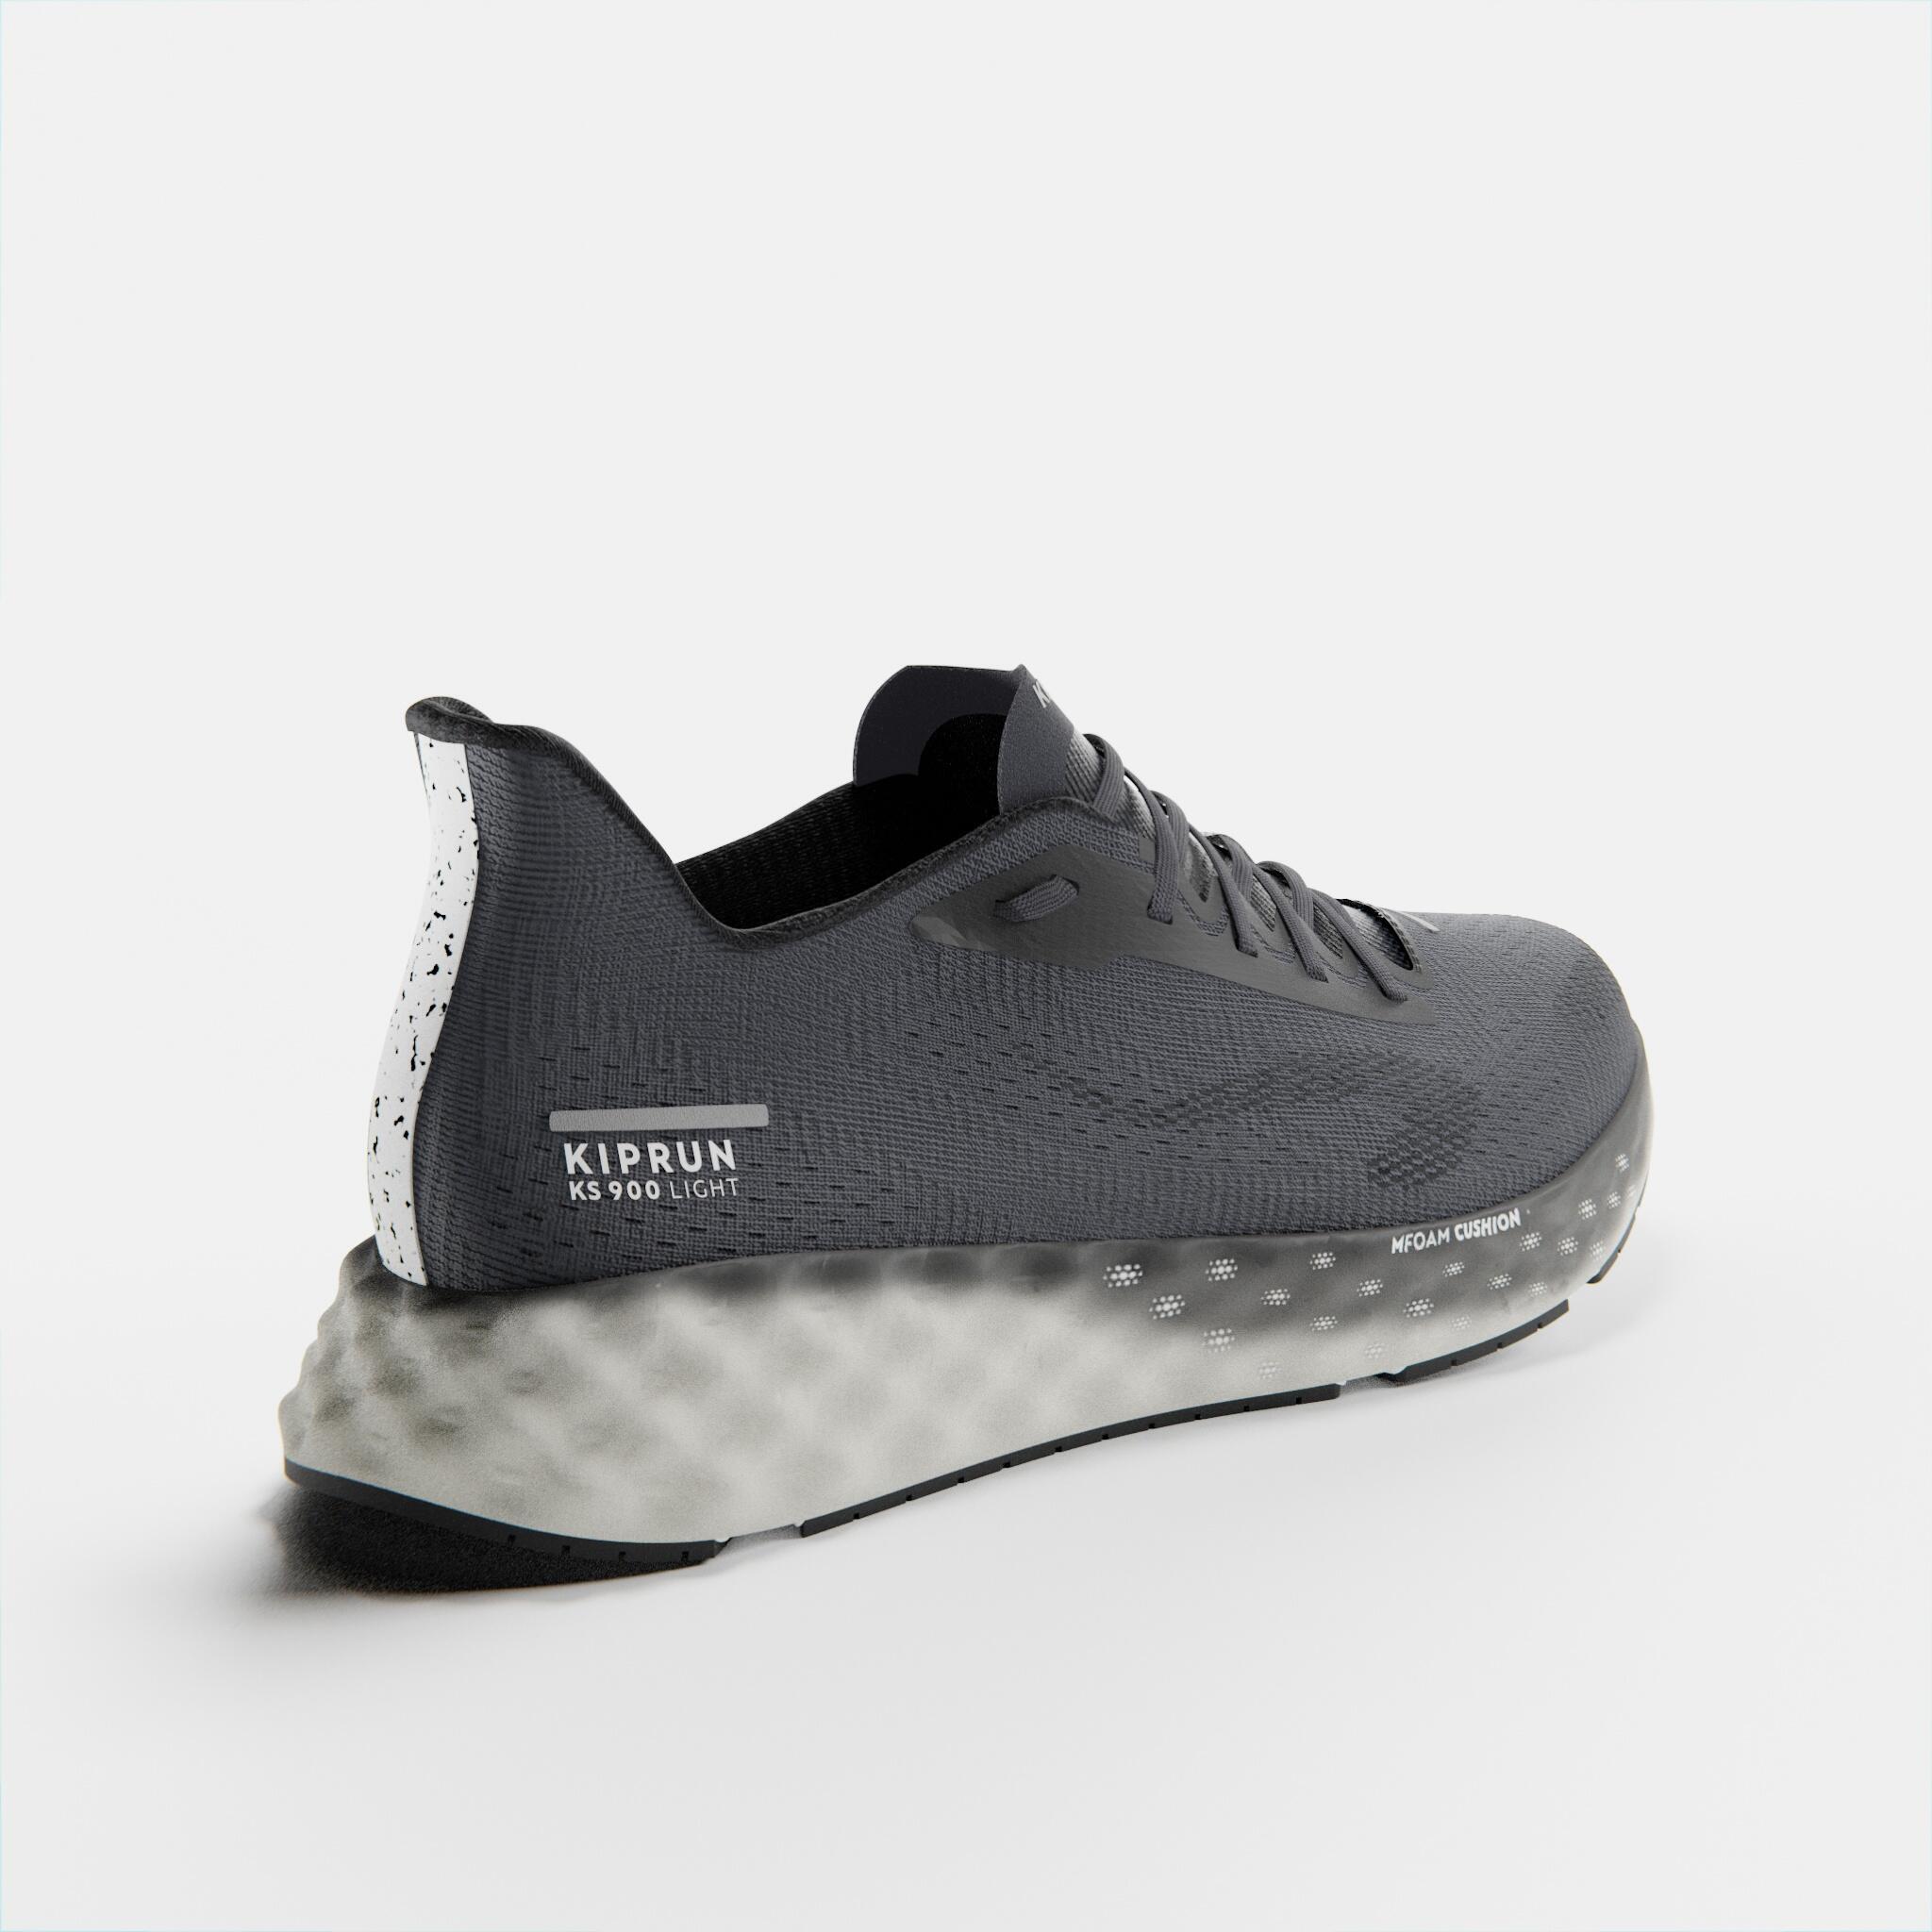 KIPRUN KS900 Light men's running shoes - dark grey 11/13